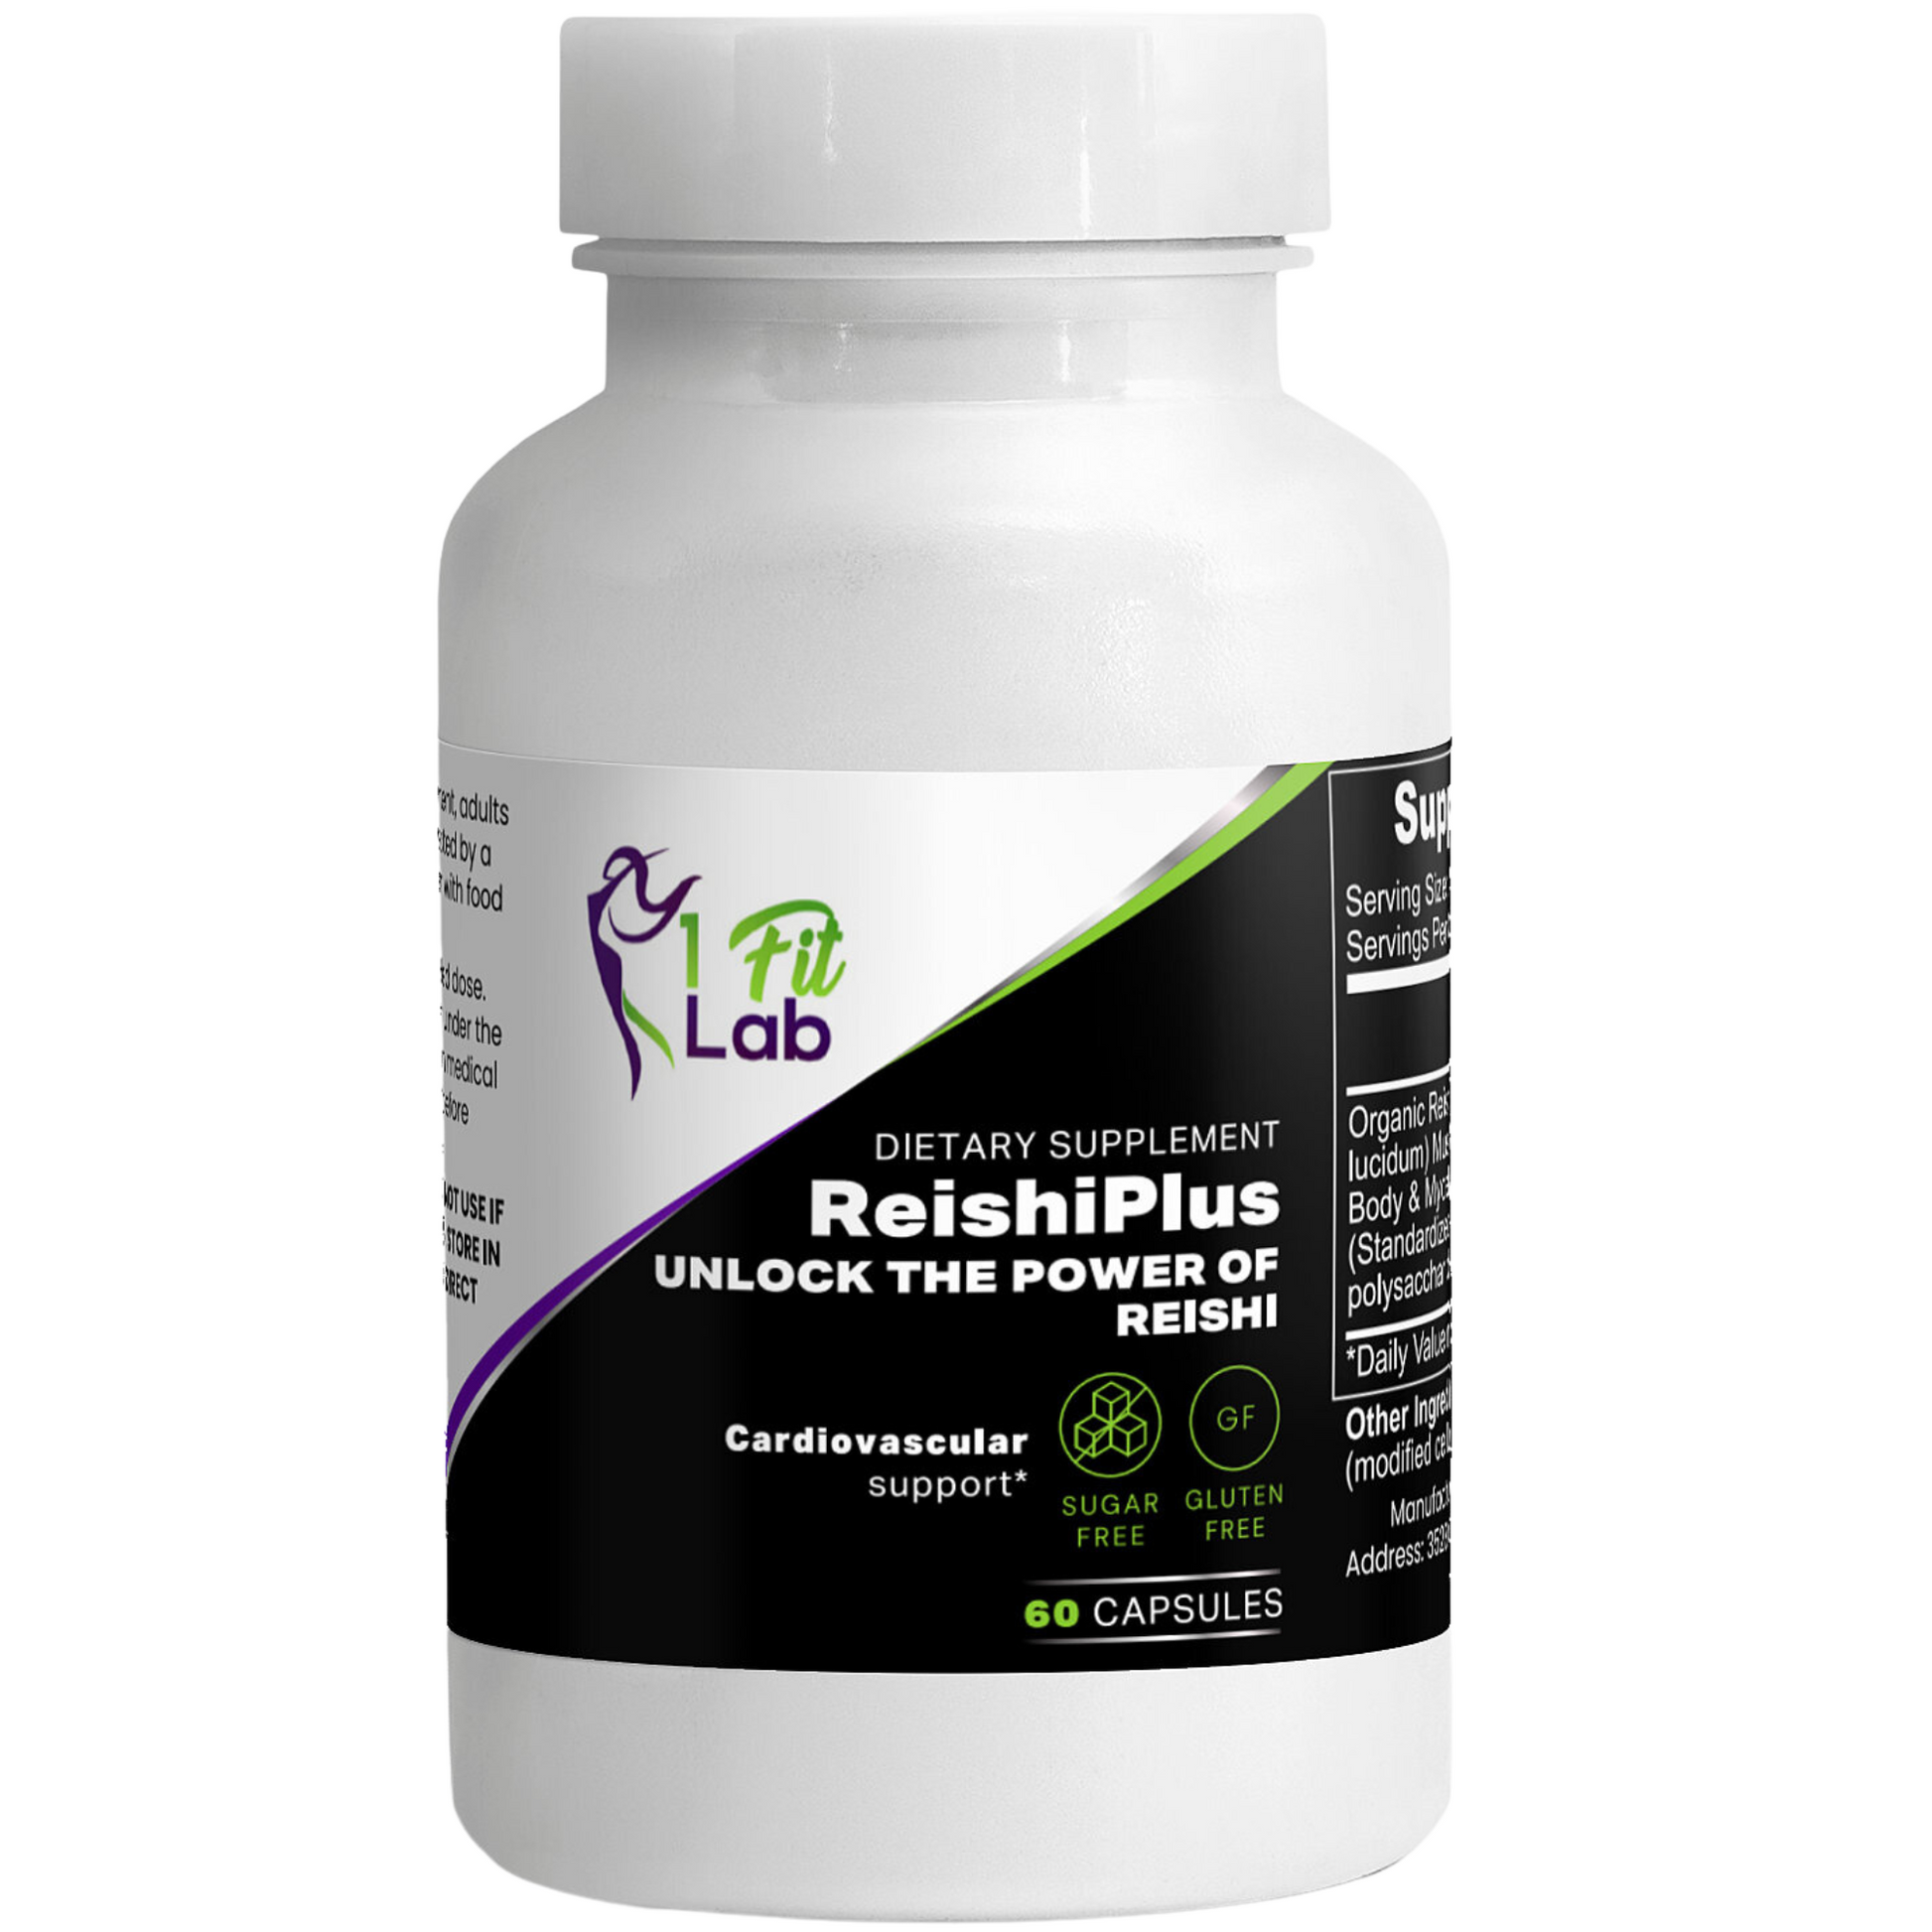 Bottle of ReishiPlus Premium Reishi Mushroom Extract for immunity and stress relief